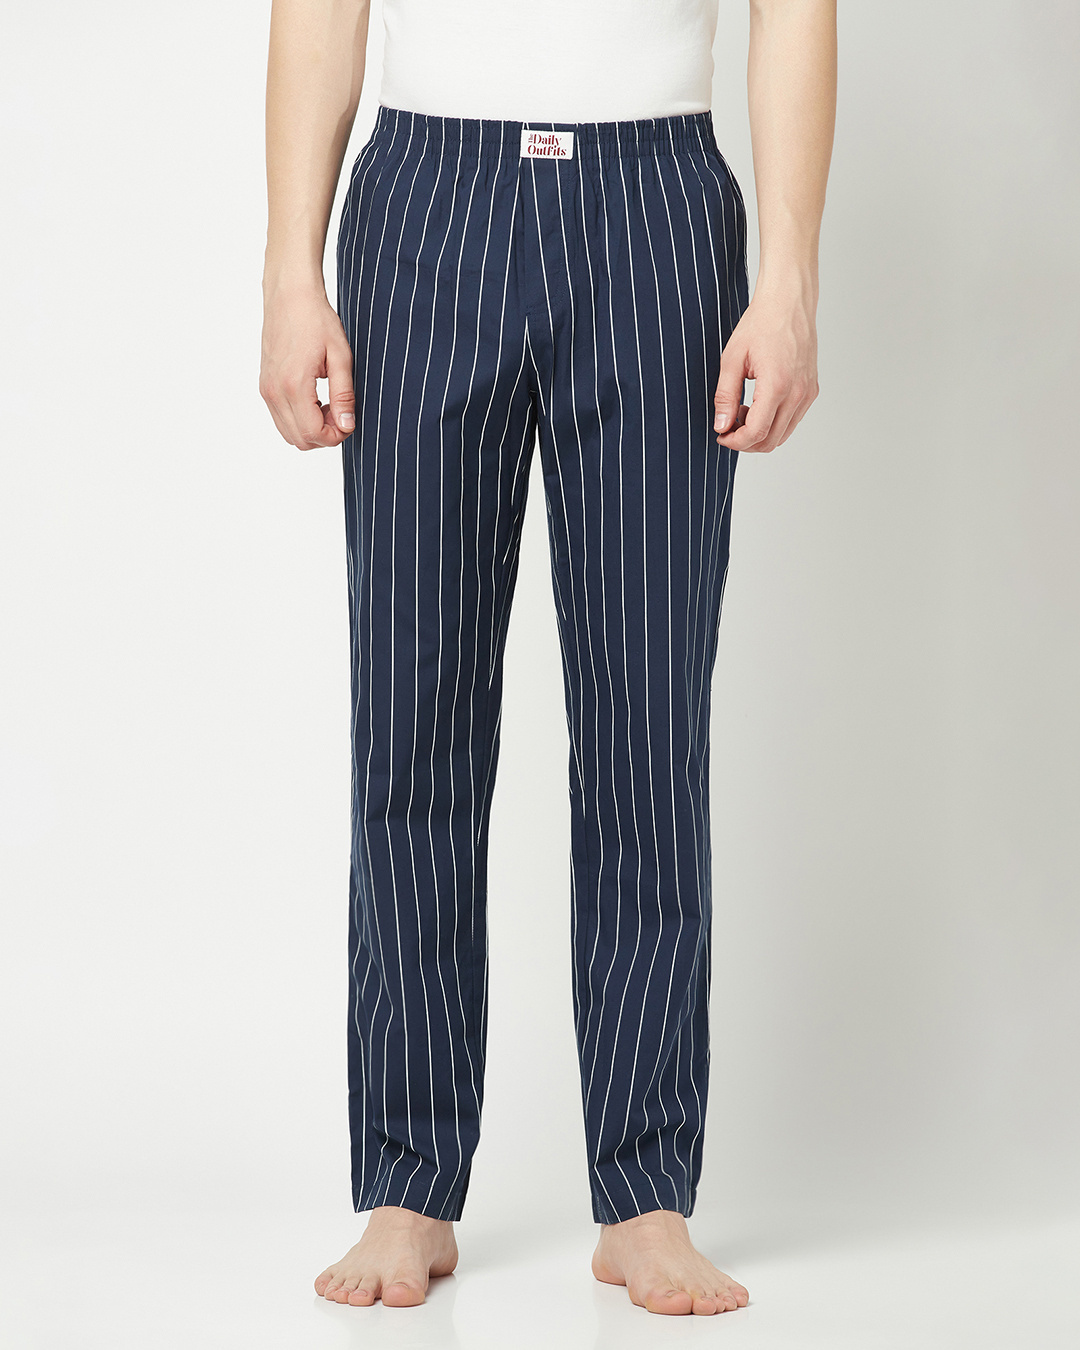 Buy Men's Blue Striped Pyjamas Online in India at Bewakoof